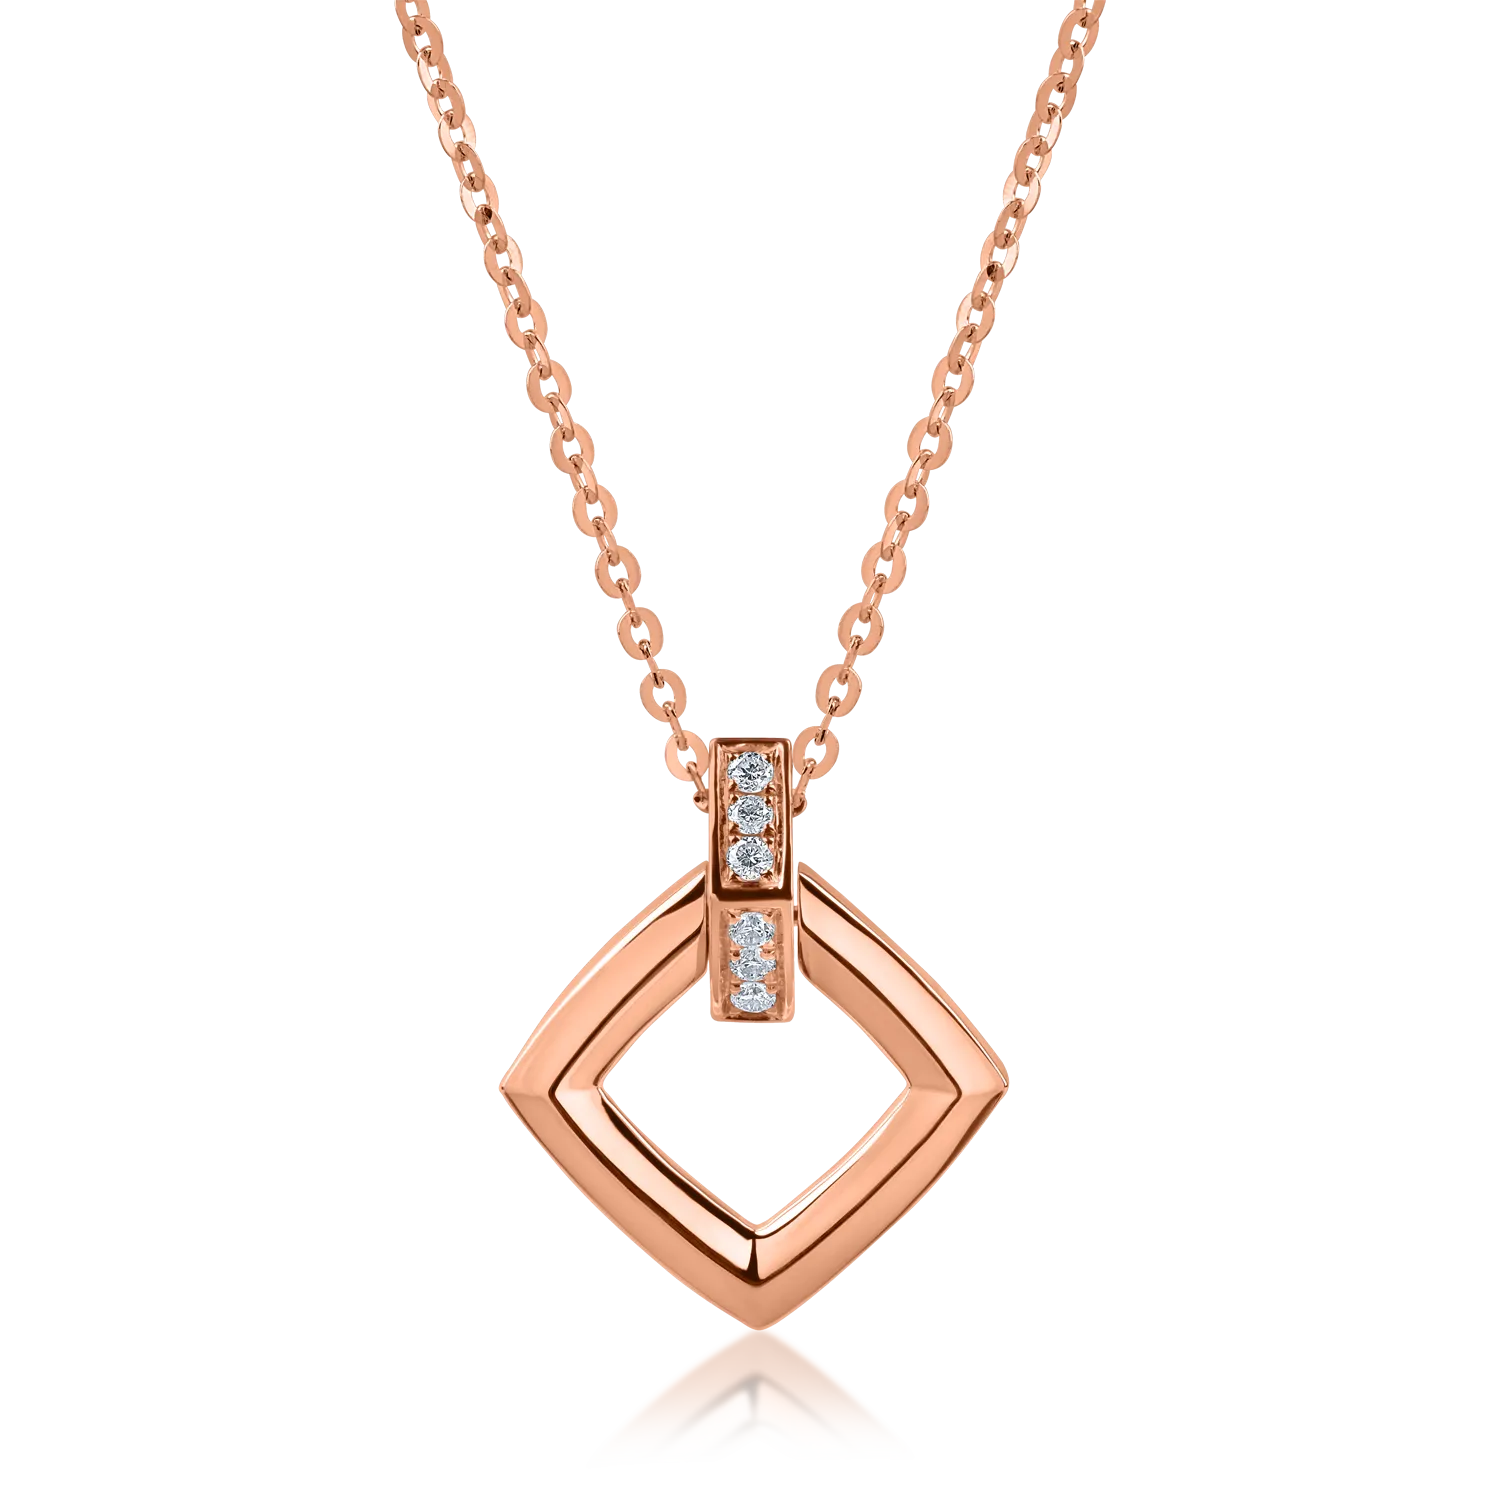 Rose gold geometric pendant necklace with 0.046ct diamonds